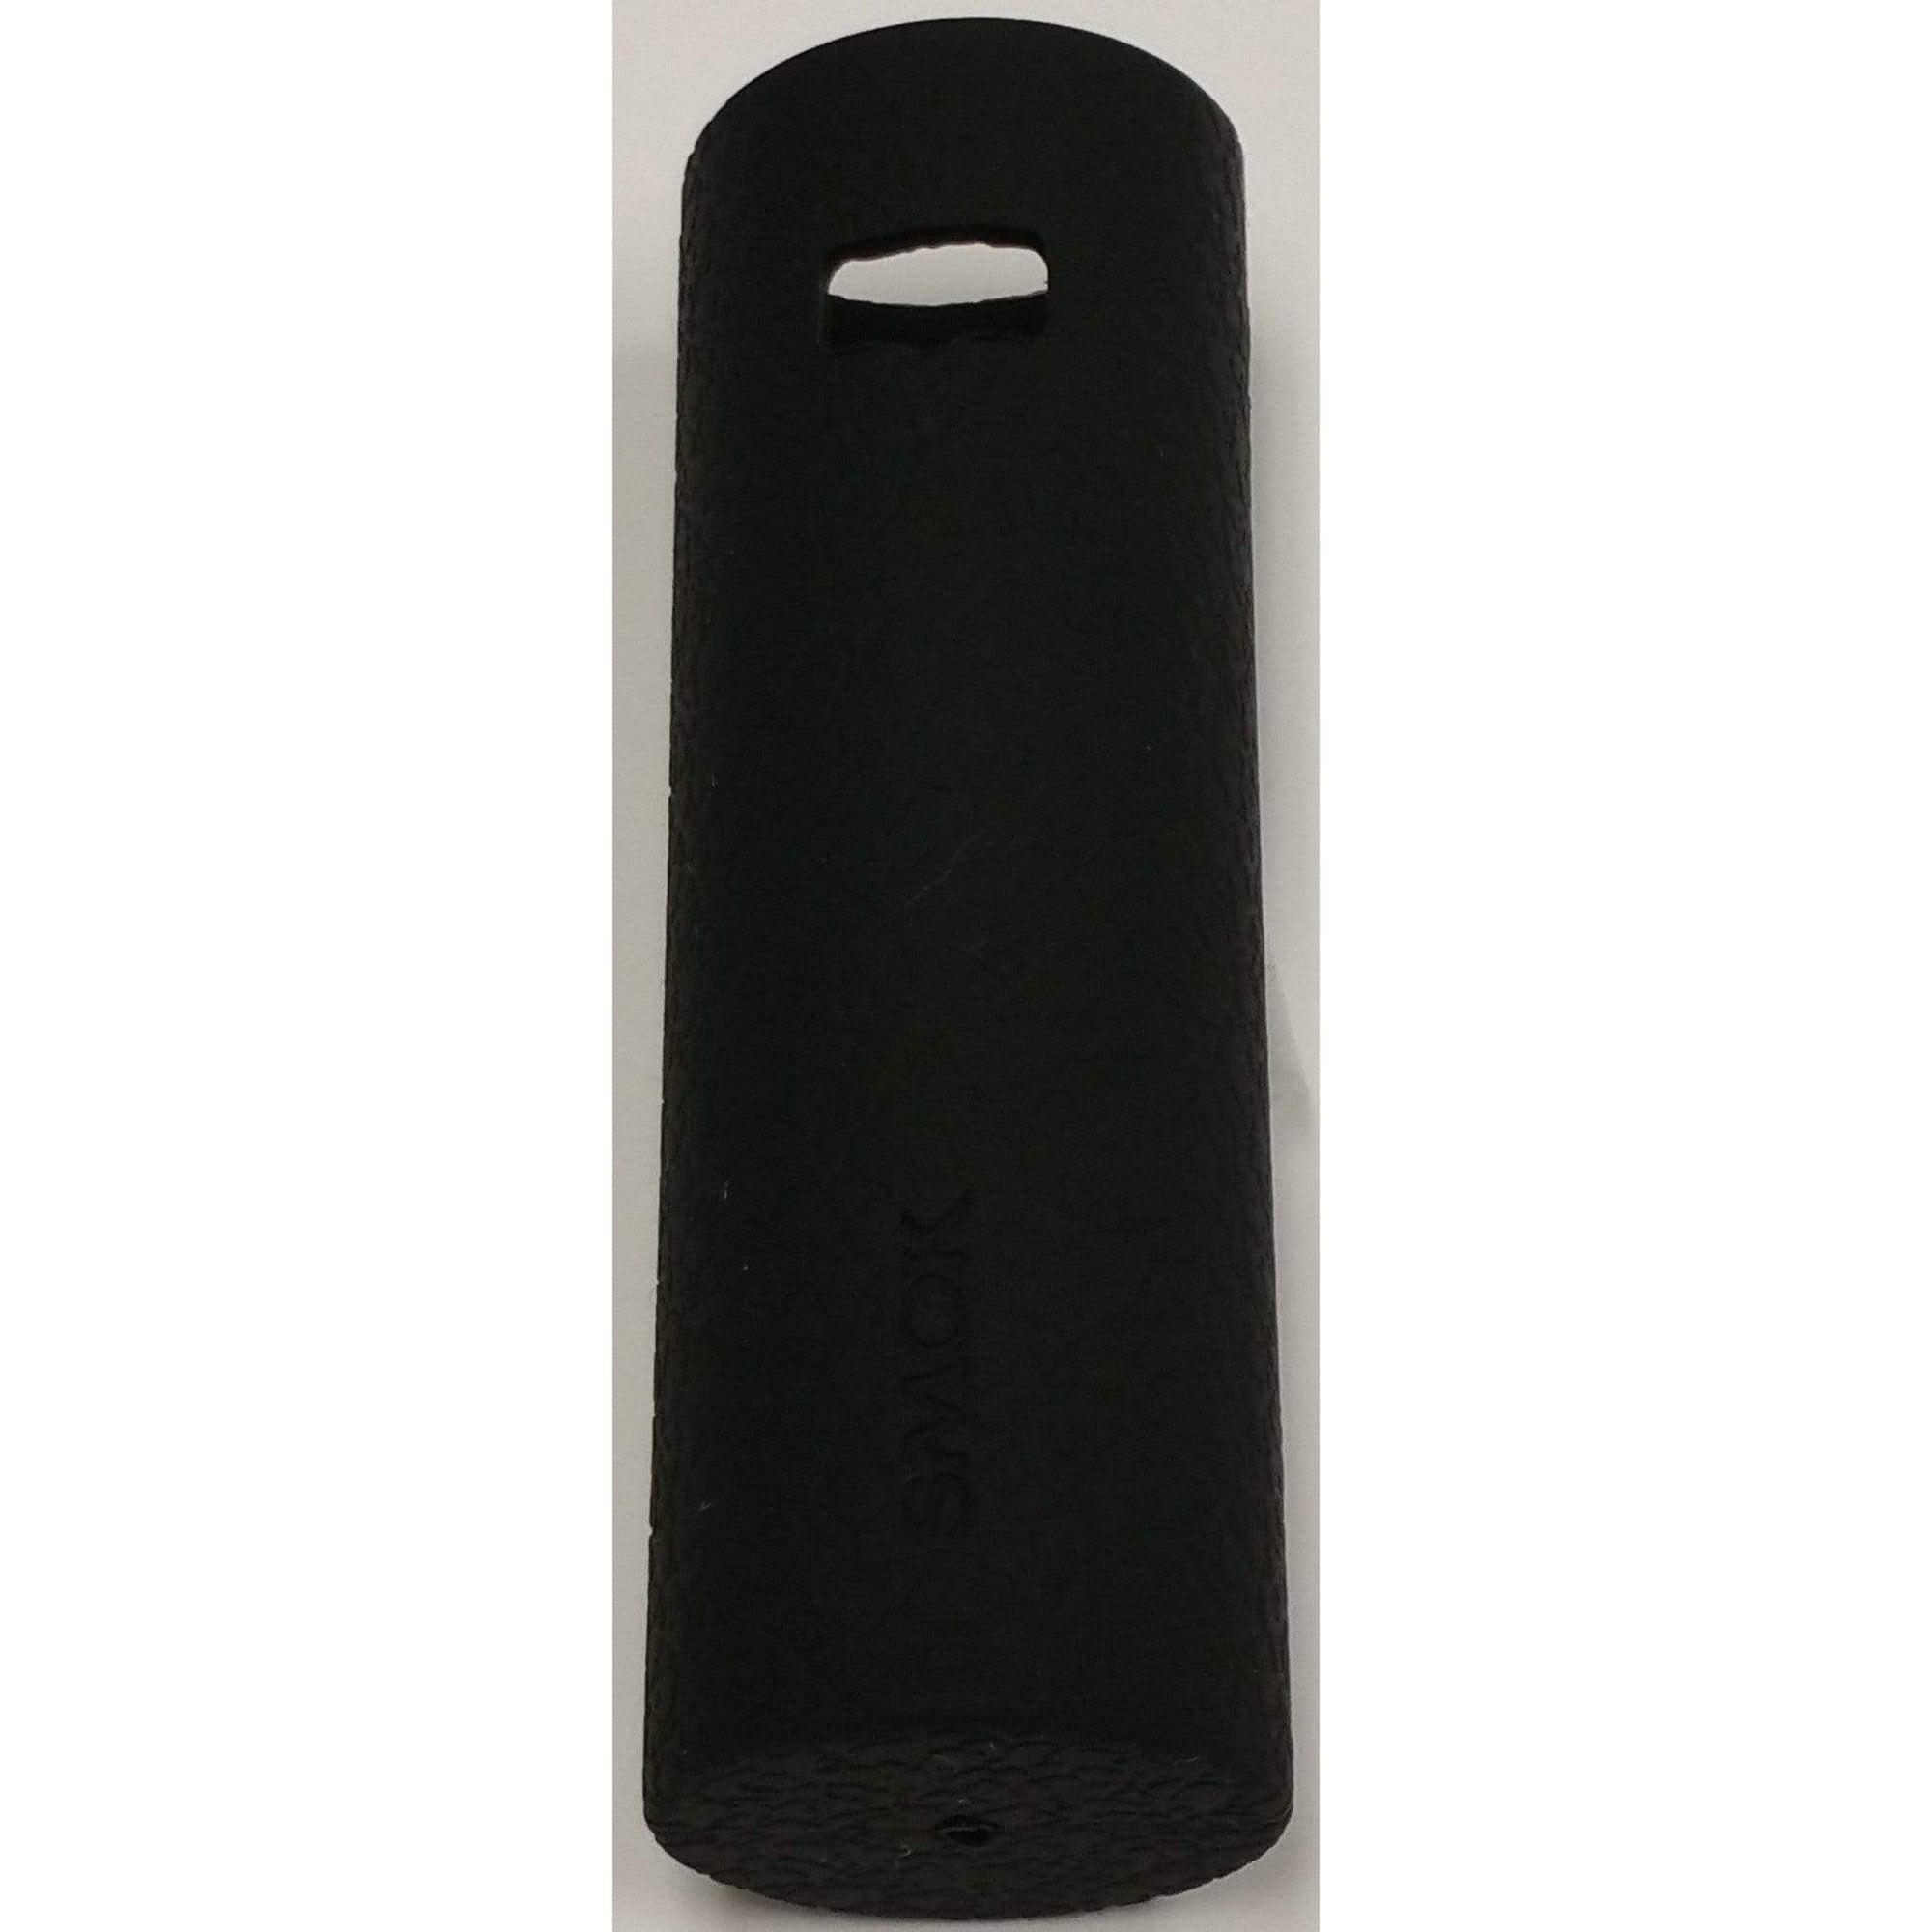 SMOK V8 Stick Battery Silicone Case Black Silicone Cases